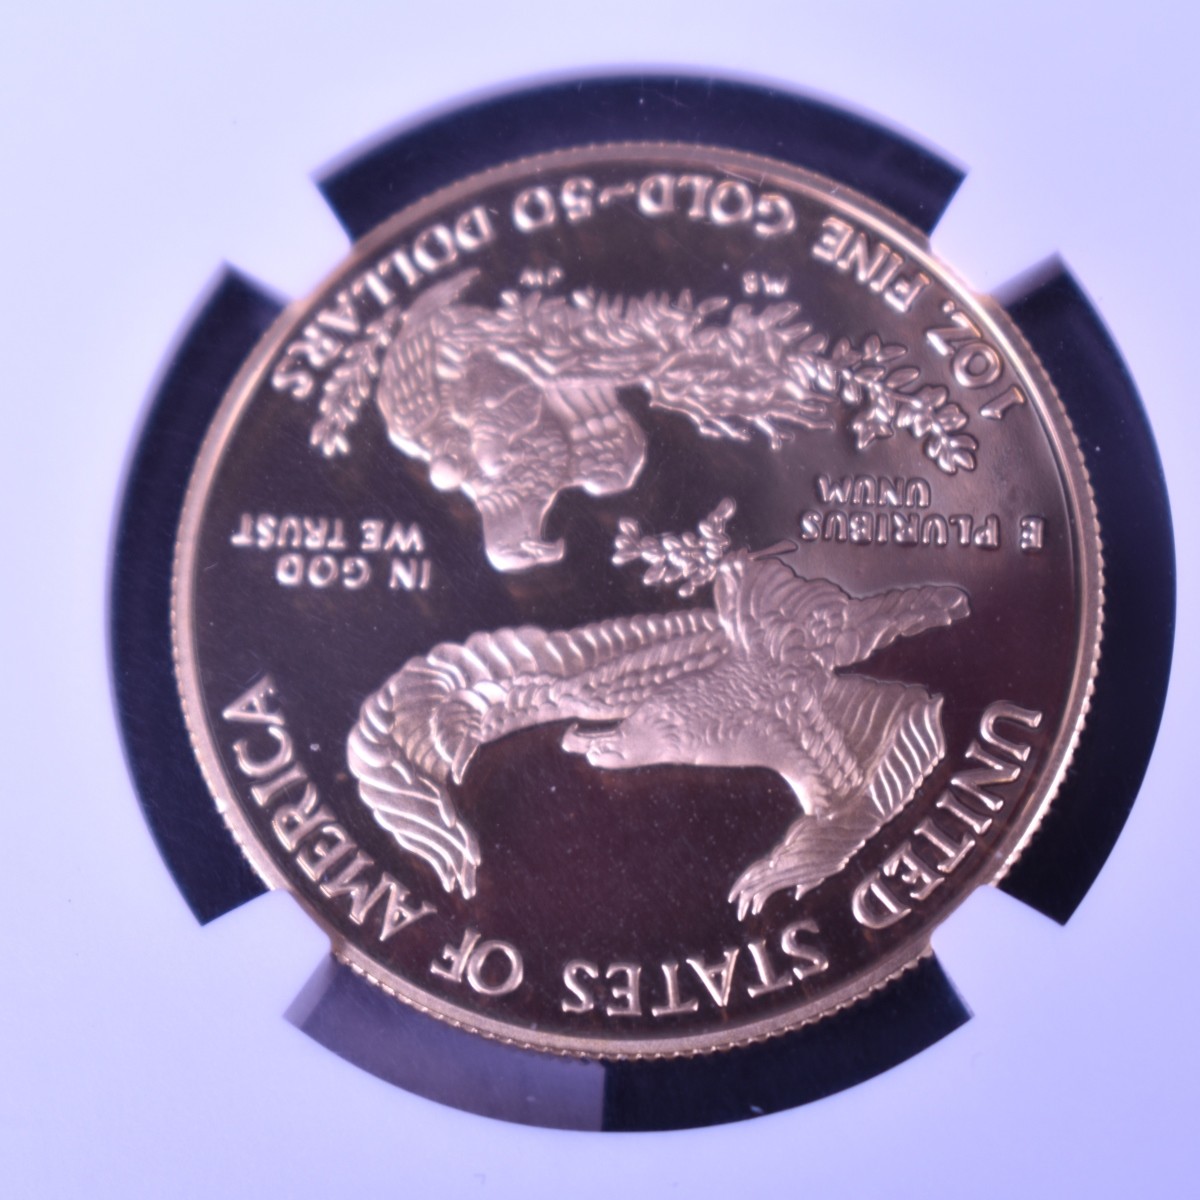 1995-W $50 Gold Eagle Coin